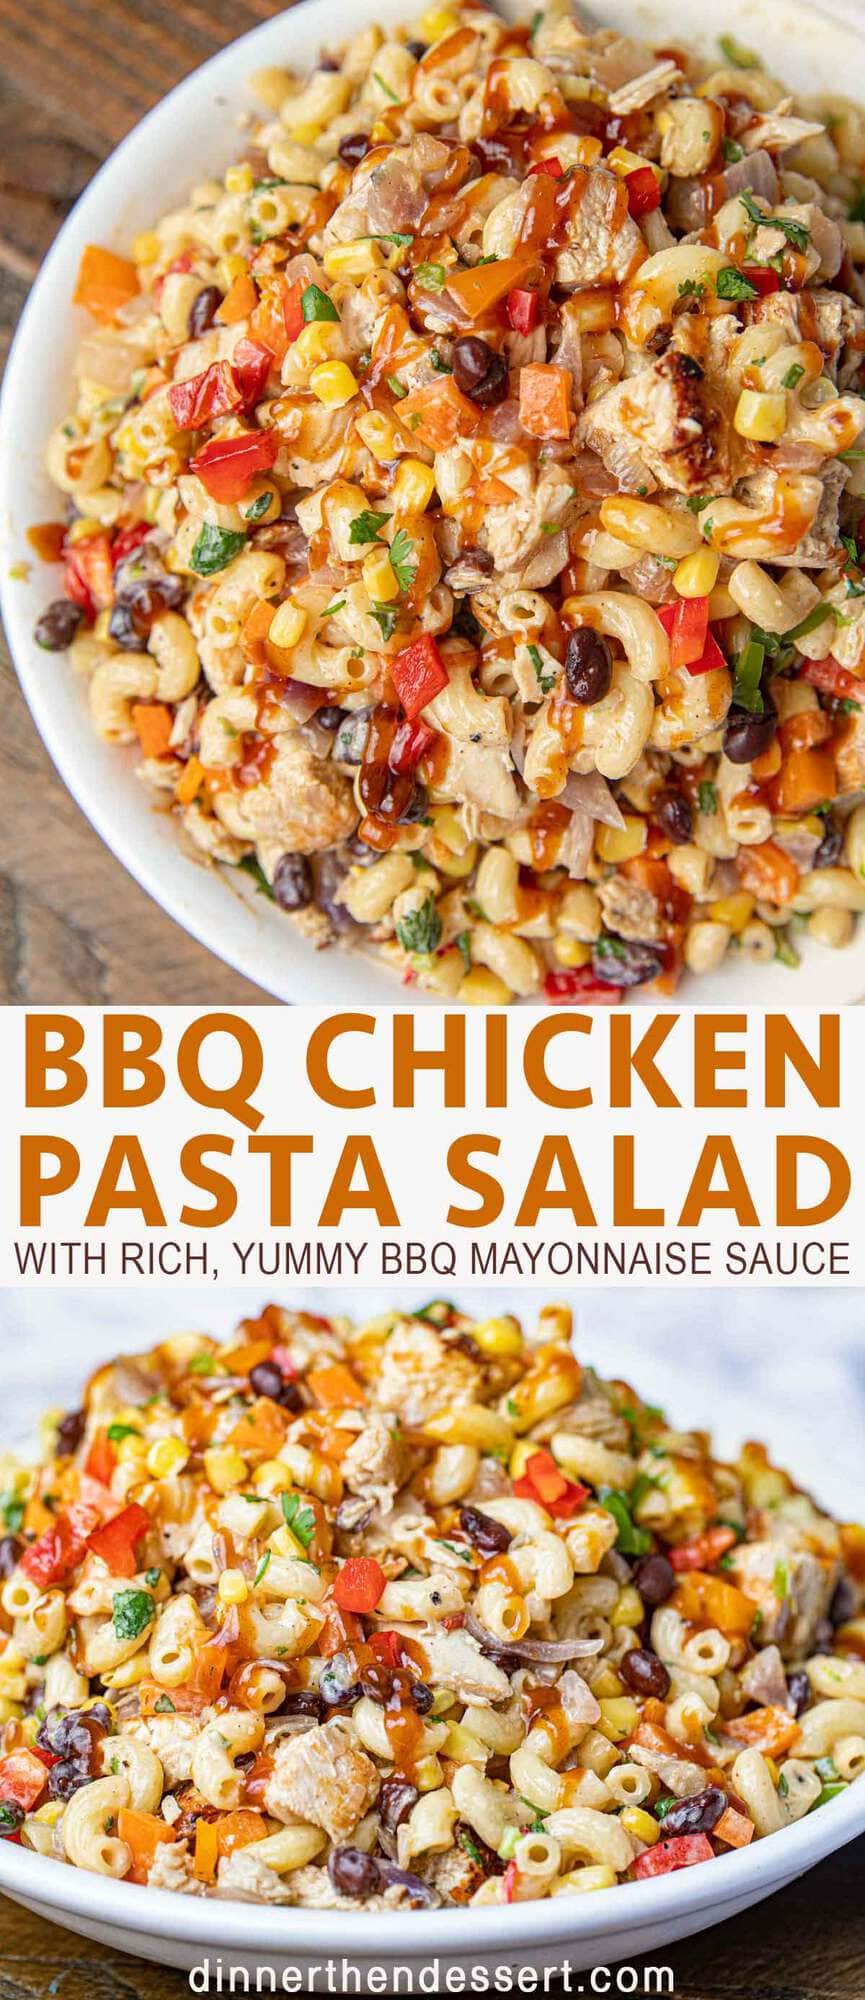 BBQ Chicken Pasta Salad with BBQ mayonnaise sauce